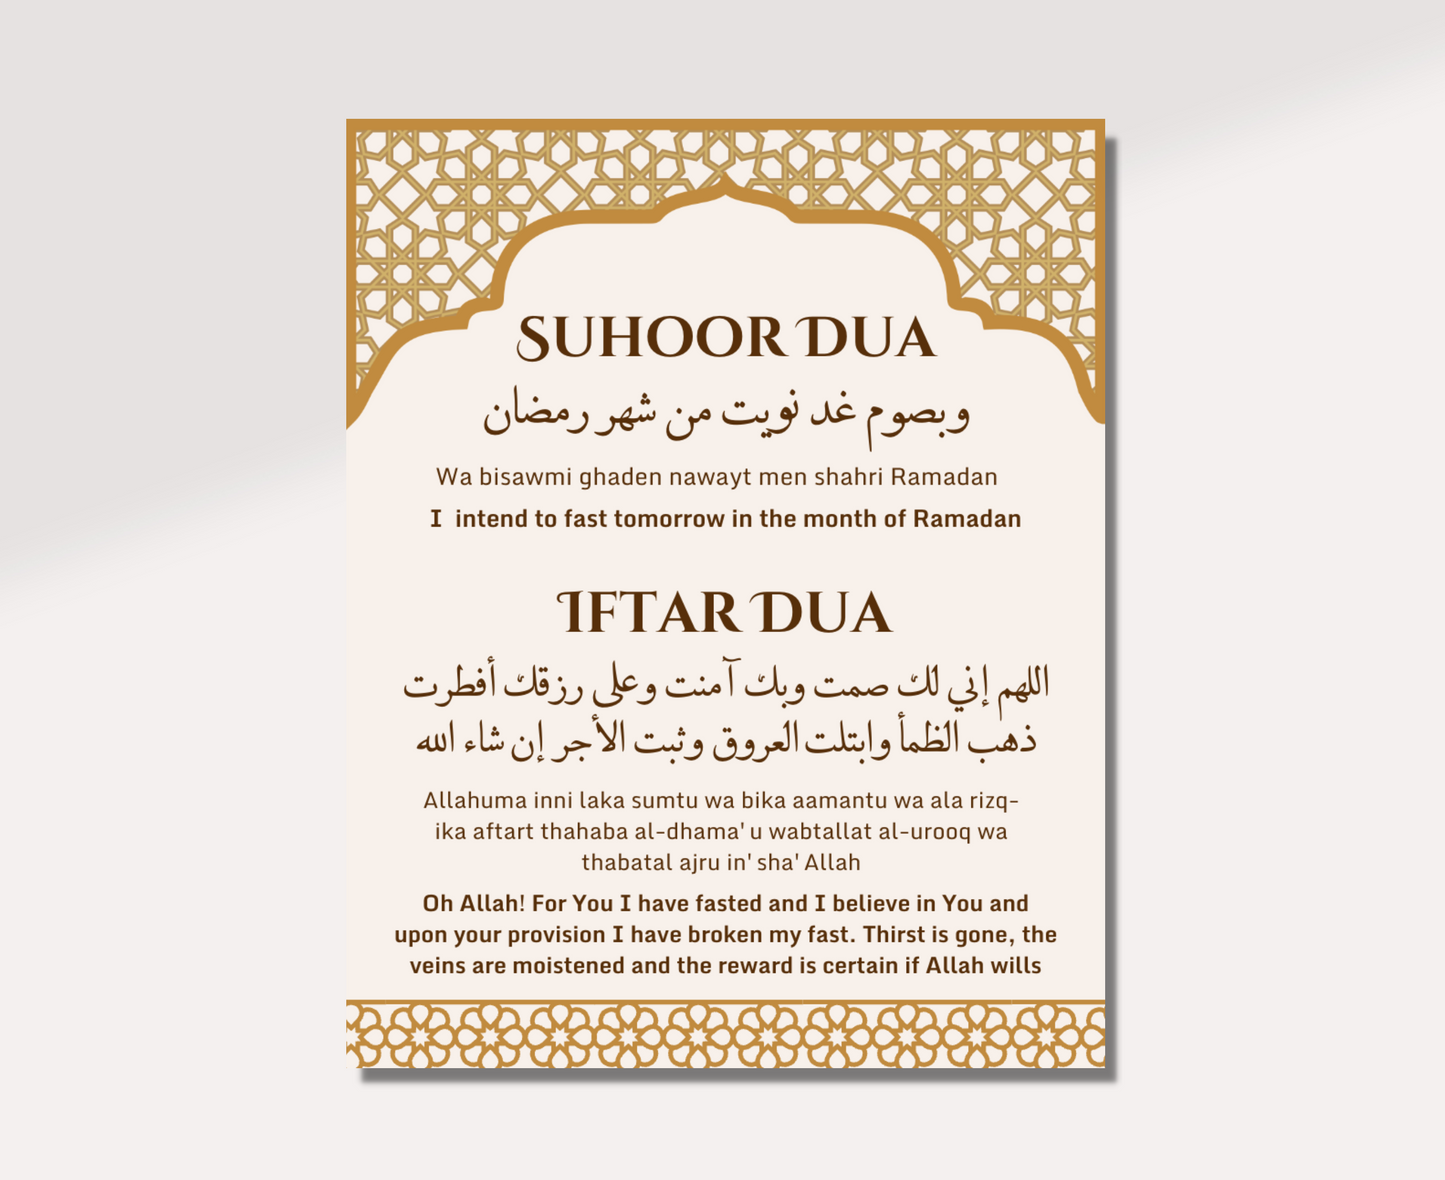 Ramadan Suhoor Dua and Iftar Dua, in Arabic, English, and Transliteration.